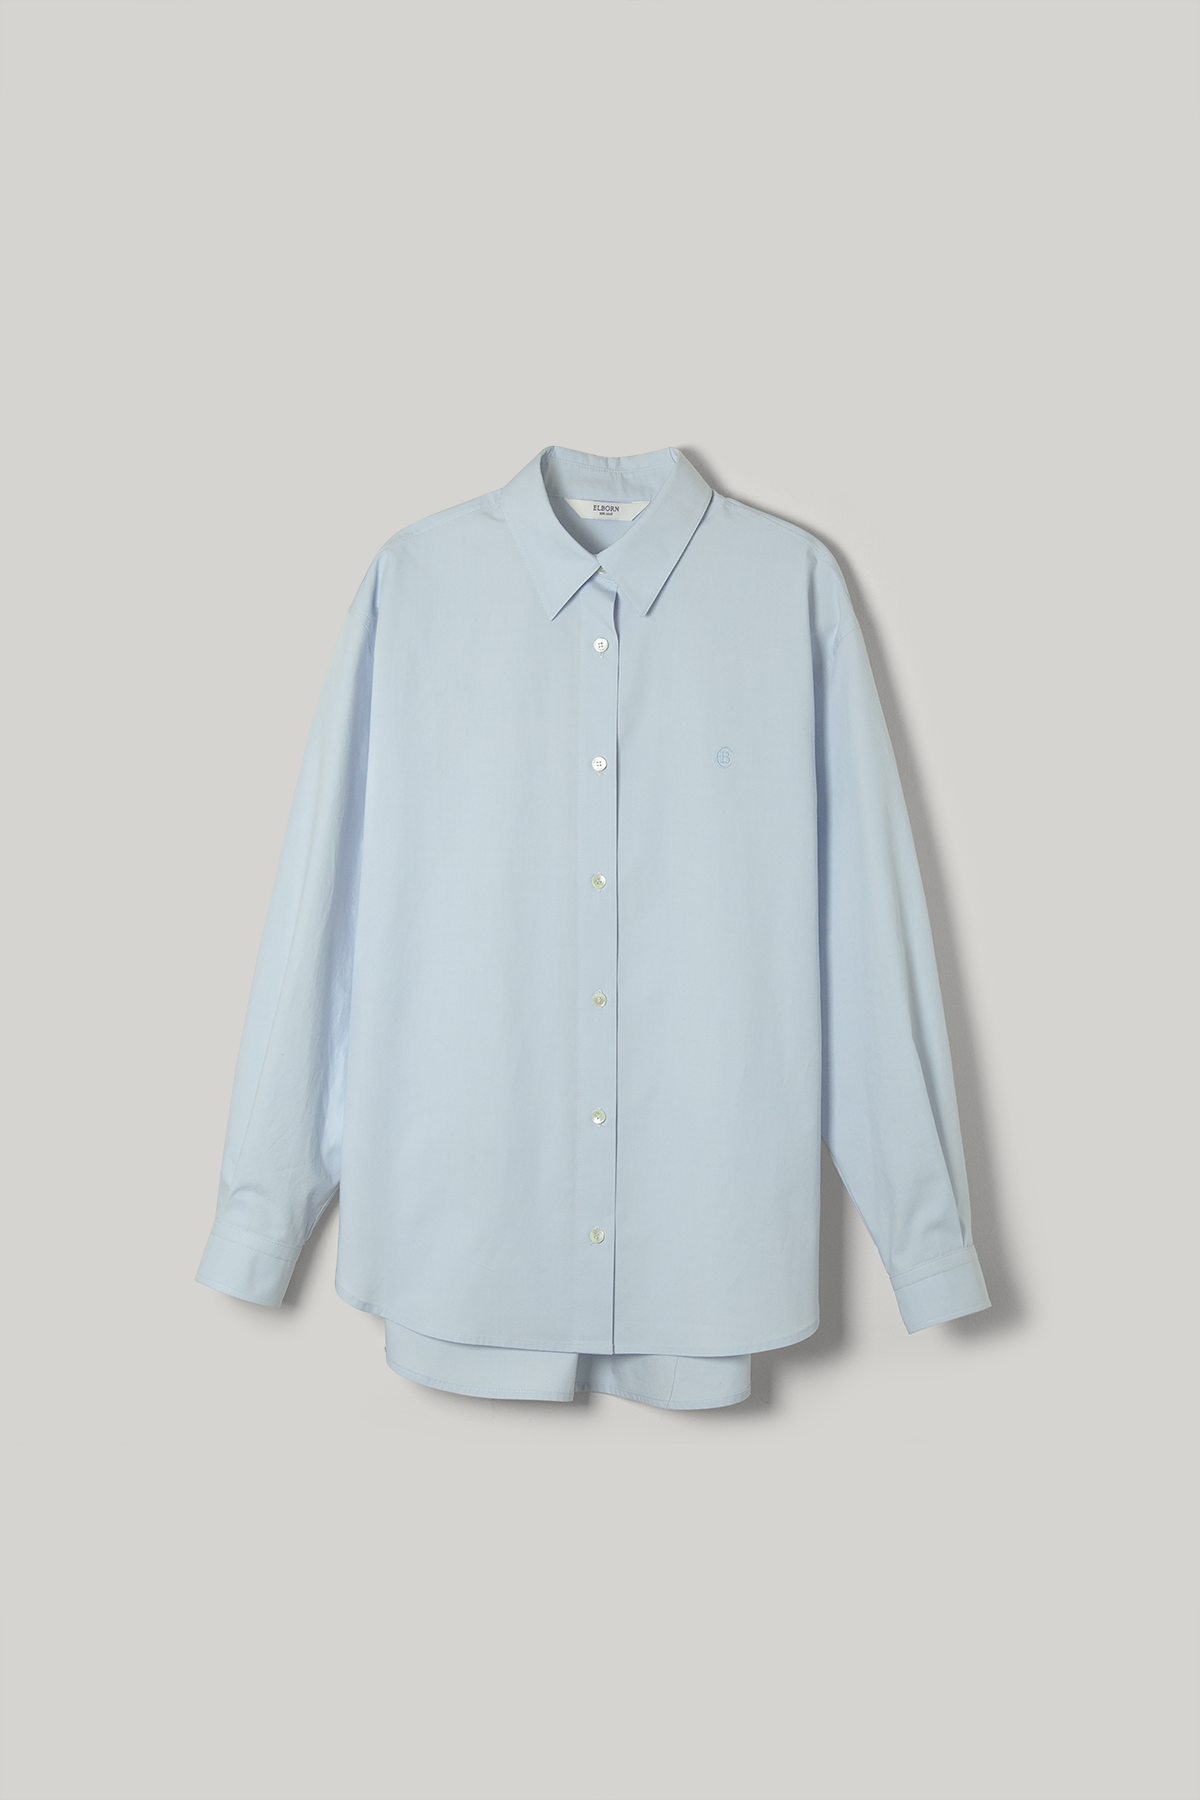 Seio Embroid Shirt (3 colors)